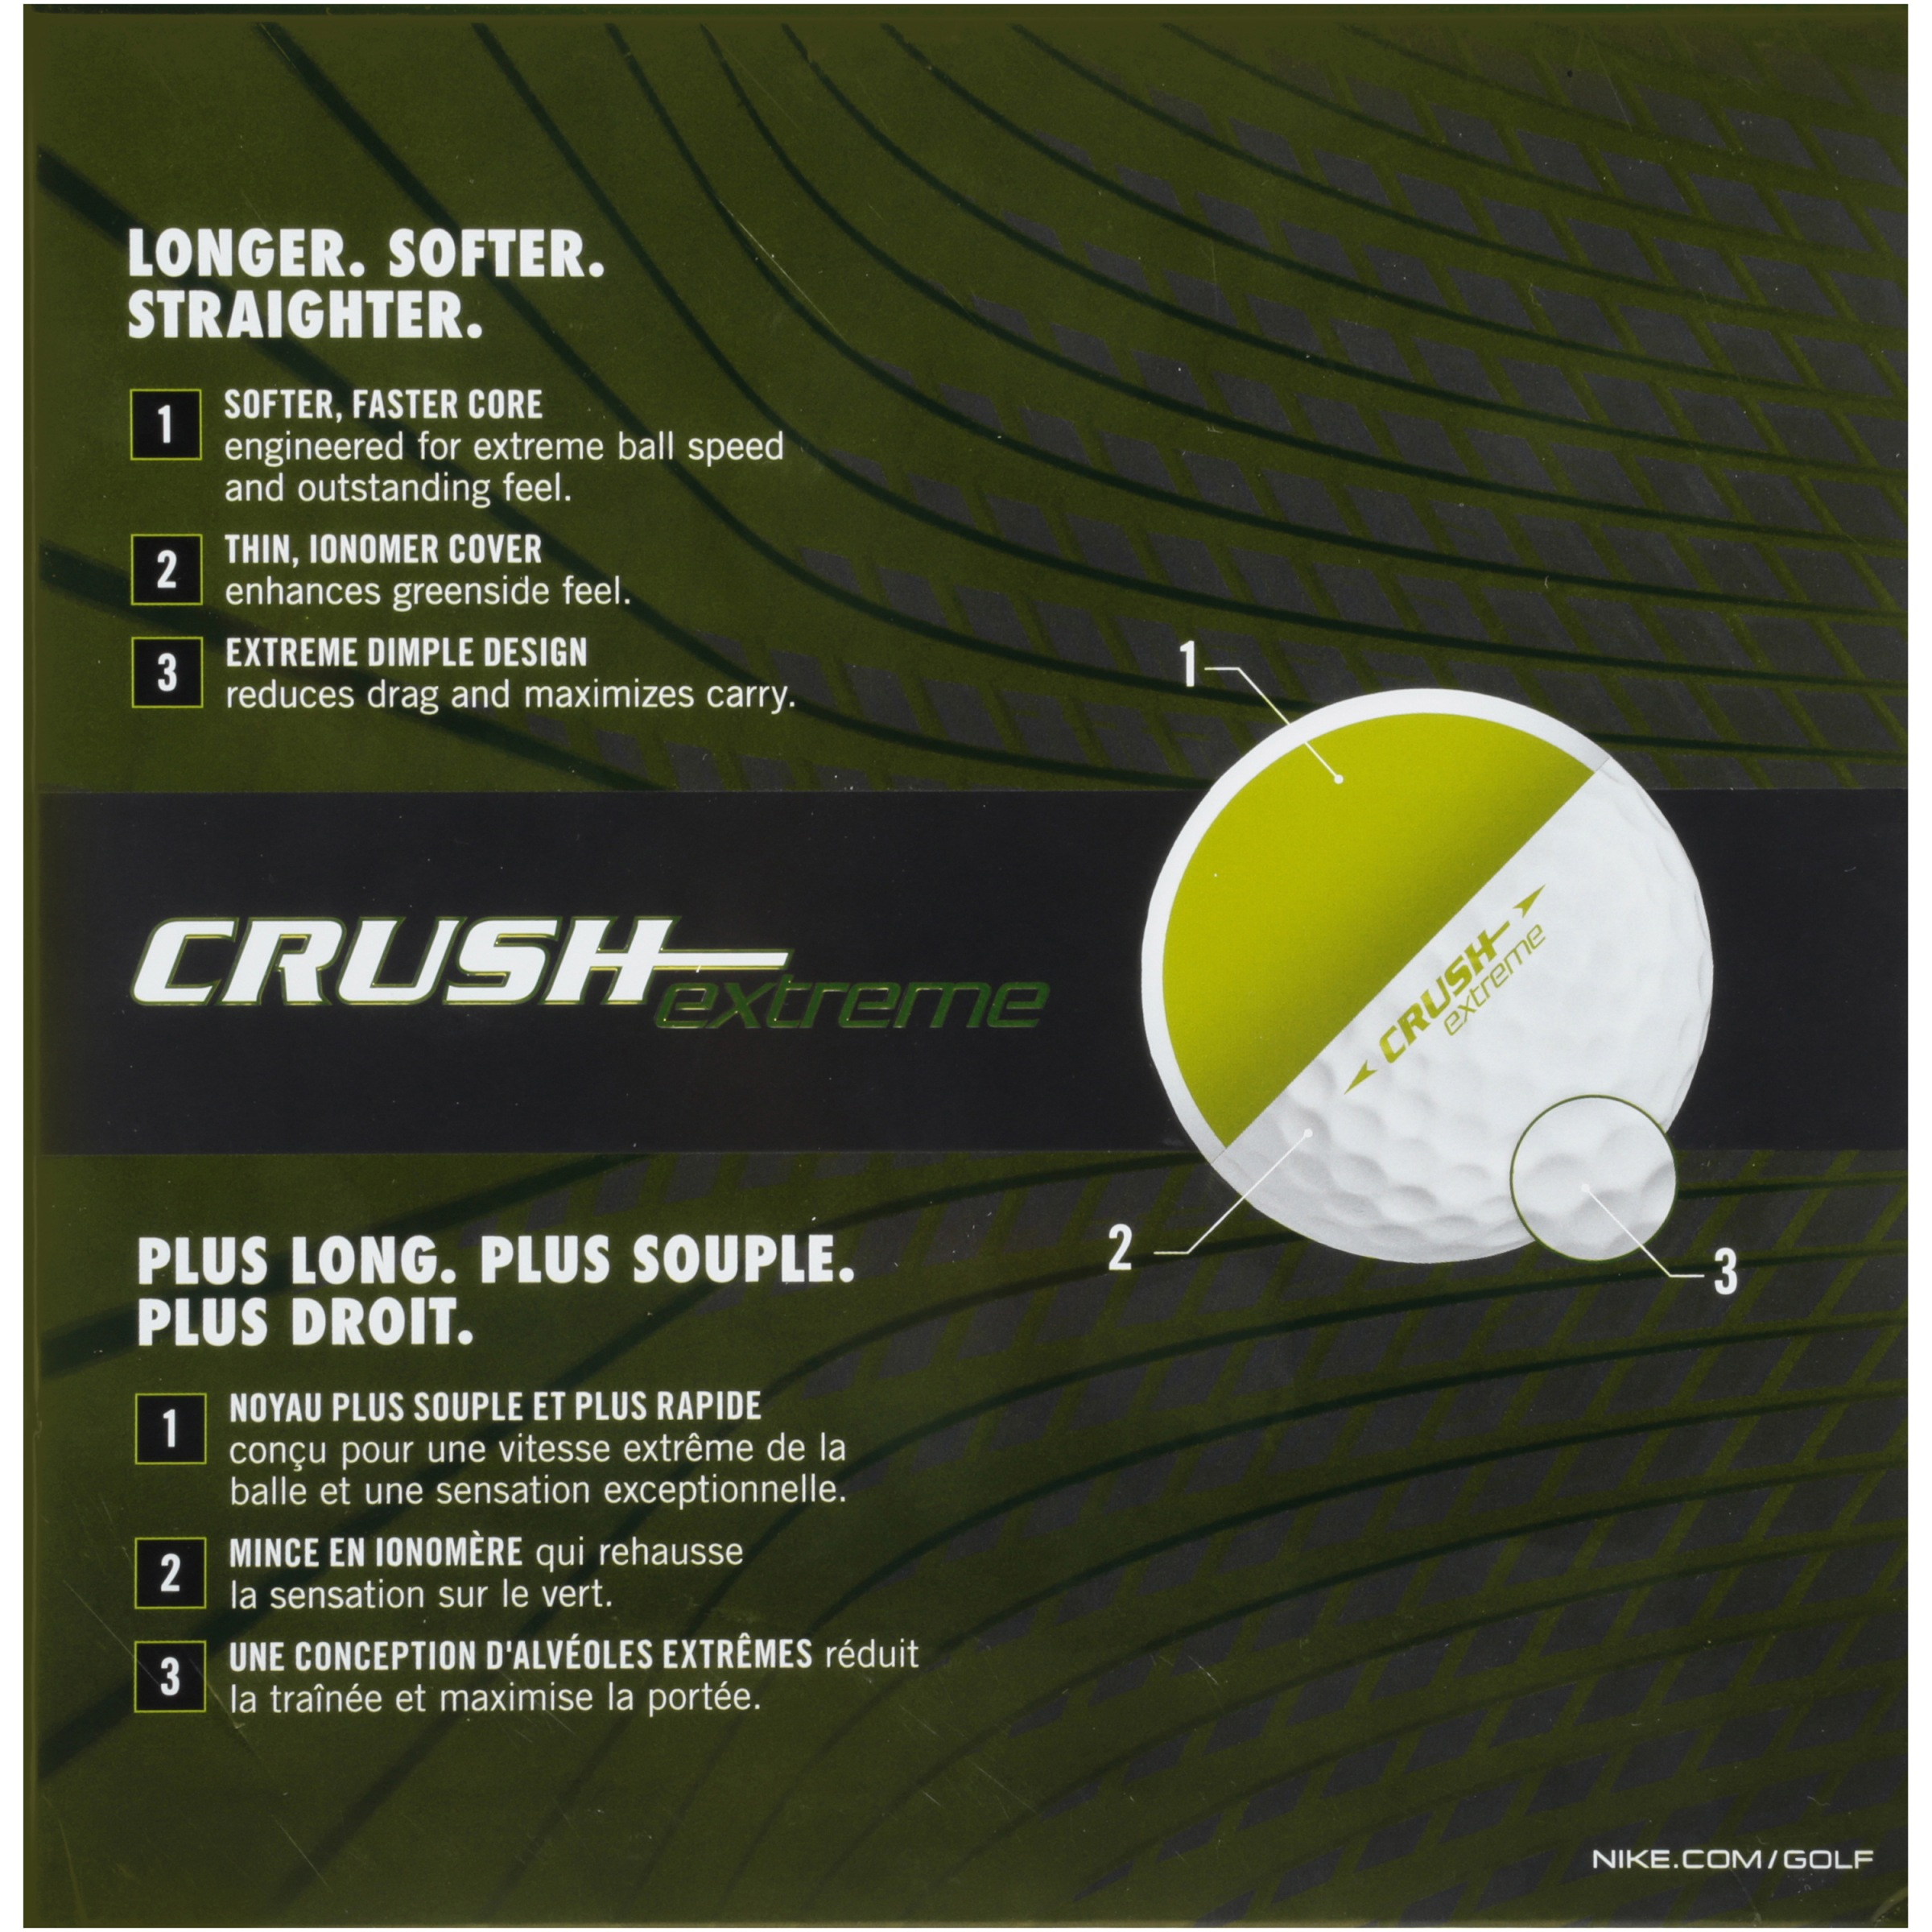 Nike Golf Crush Extreme Golf Balls, 12 Pack - image 3 of 4